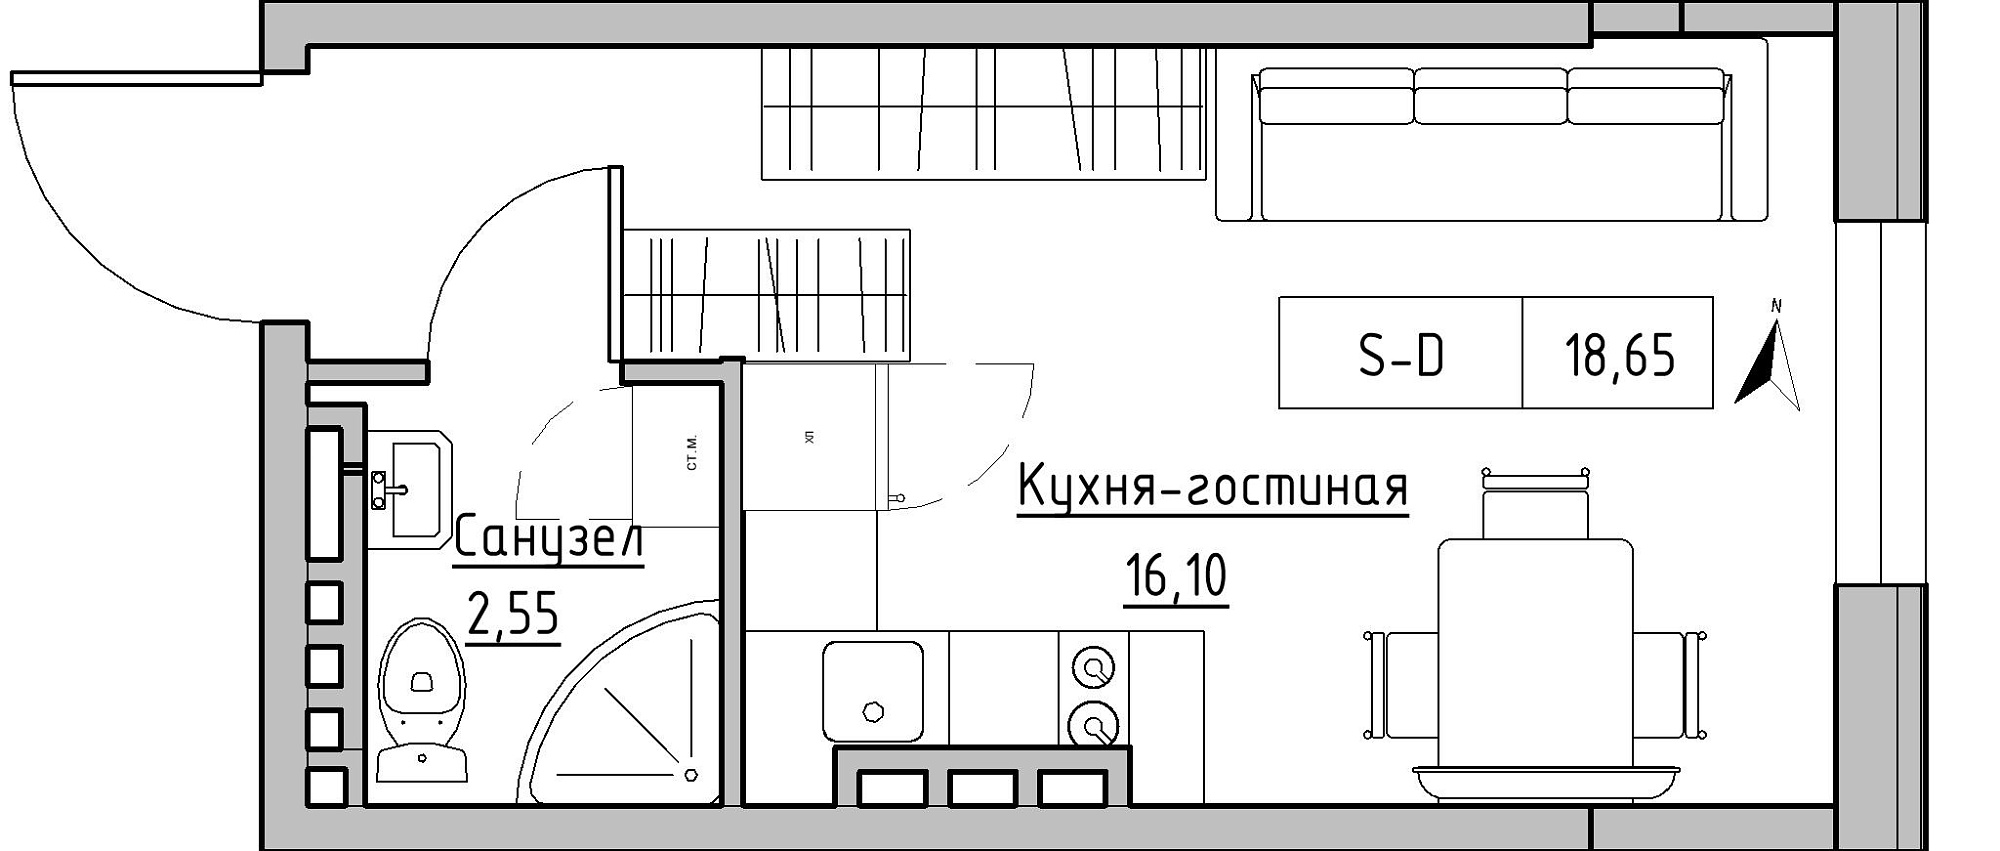 Планировка Smart-квартира площей 18.65м2, KS-024-05/0017.